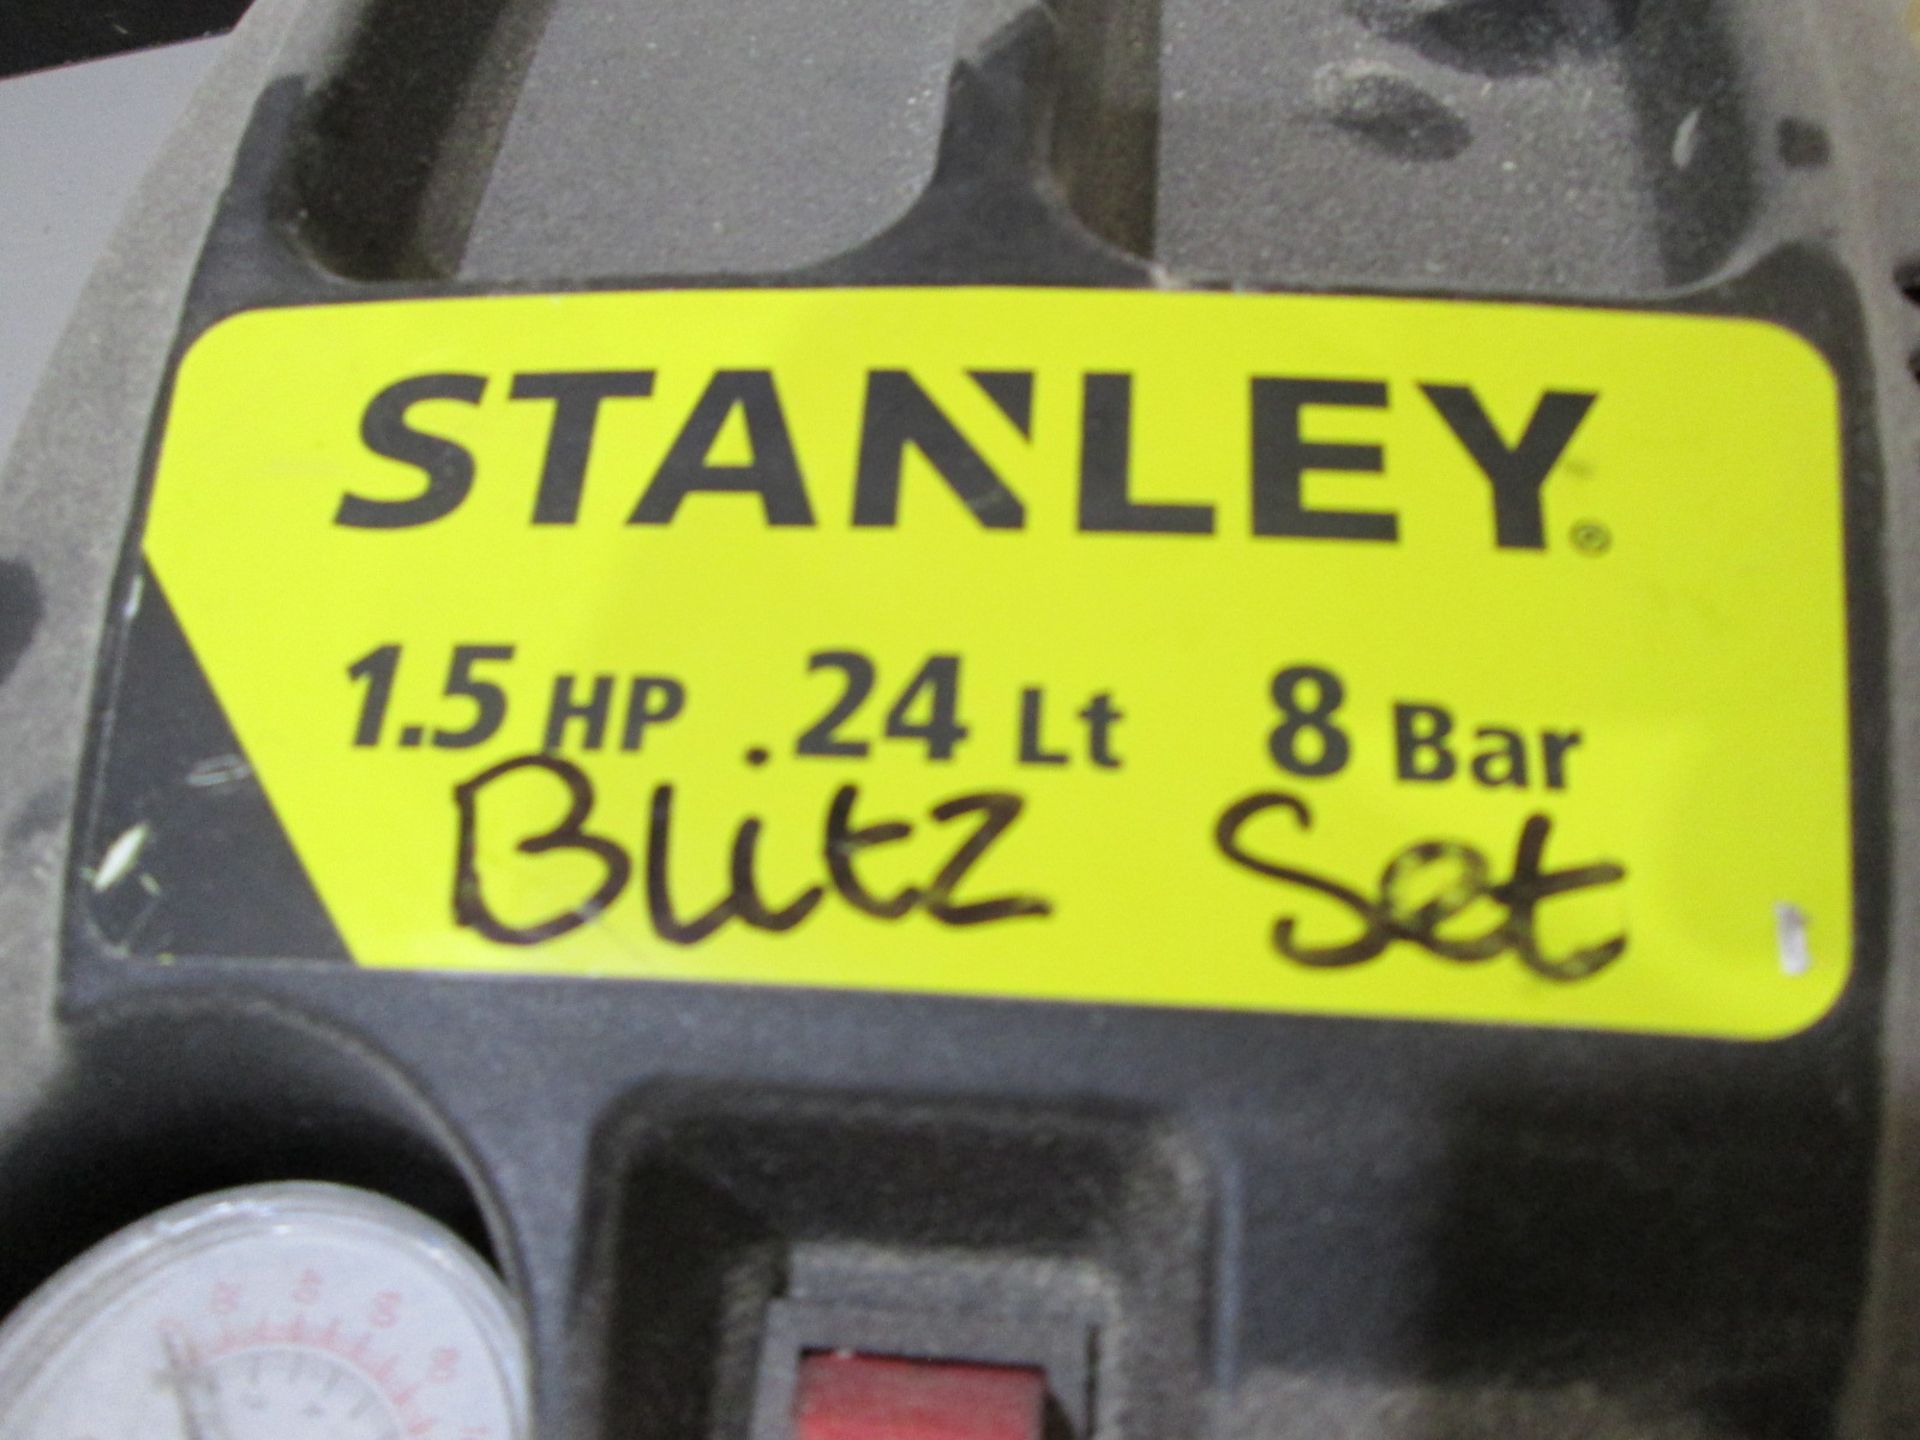 Stanley D200/8/24 /air Compressor, 1.5 Hp, 24 ltr air receiver, 8 bar working pressure, YOM 2017 - Image 3 of 6